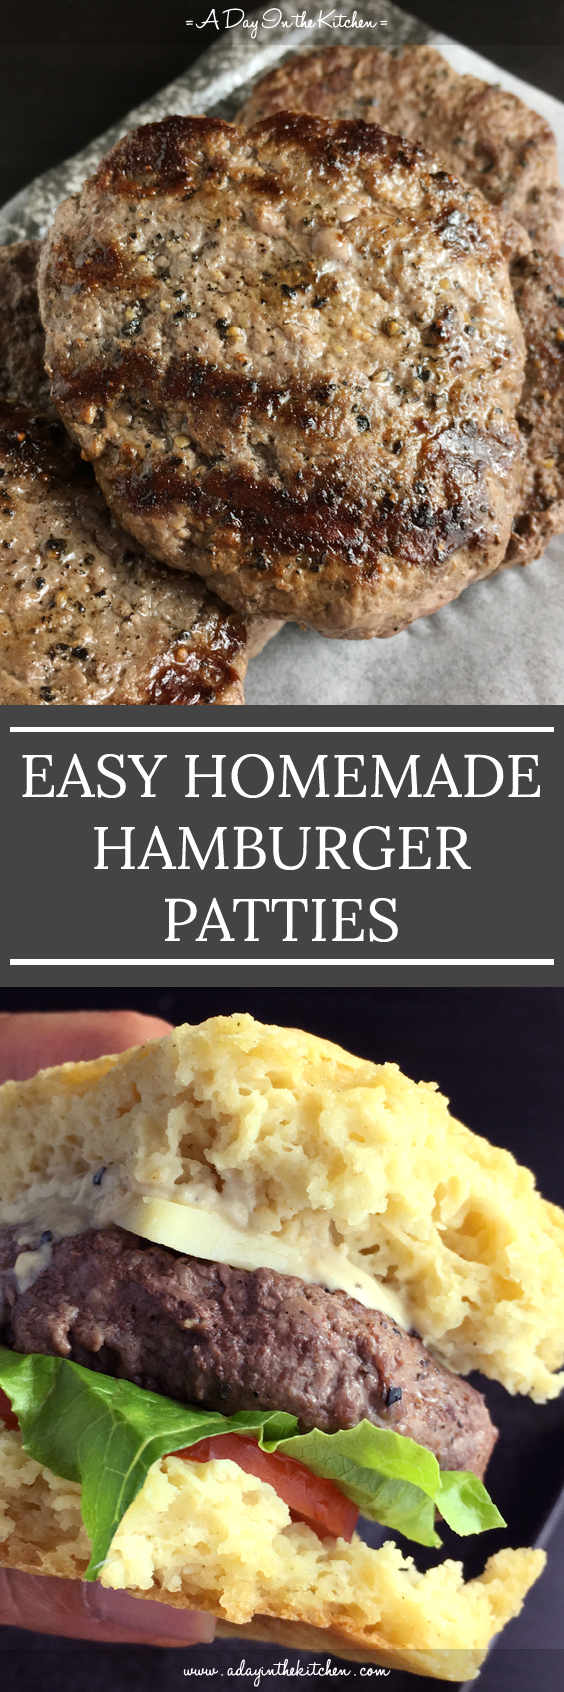 Easy Homemade Hamburger Patties